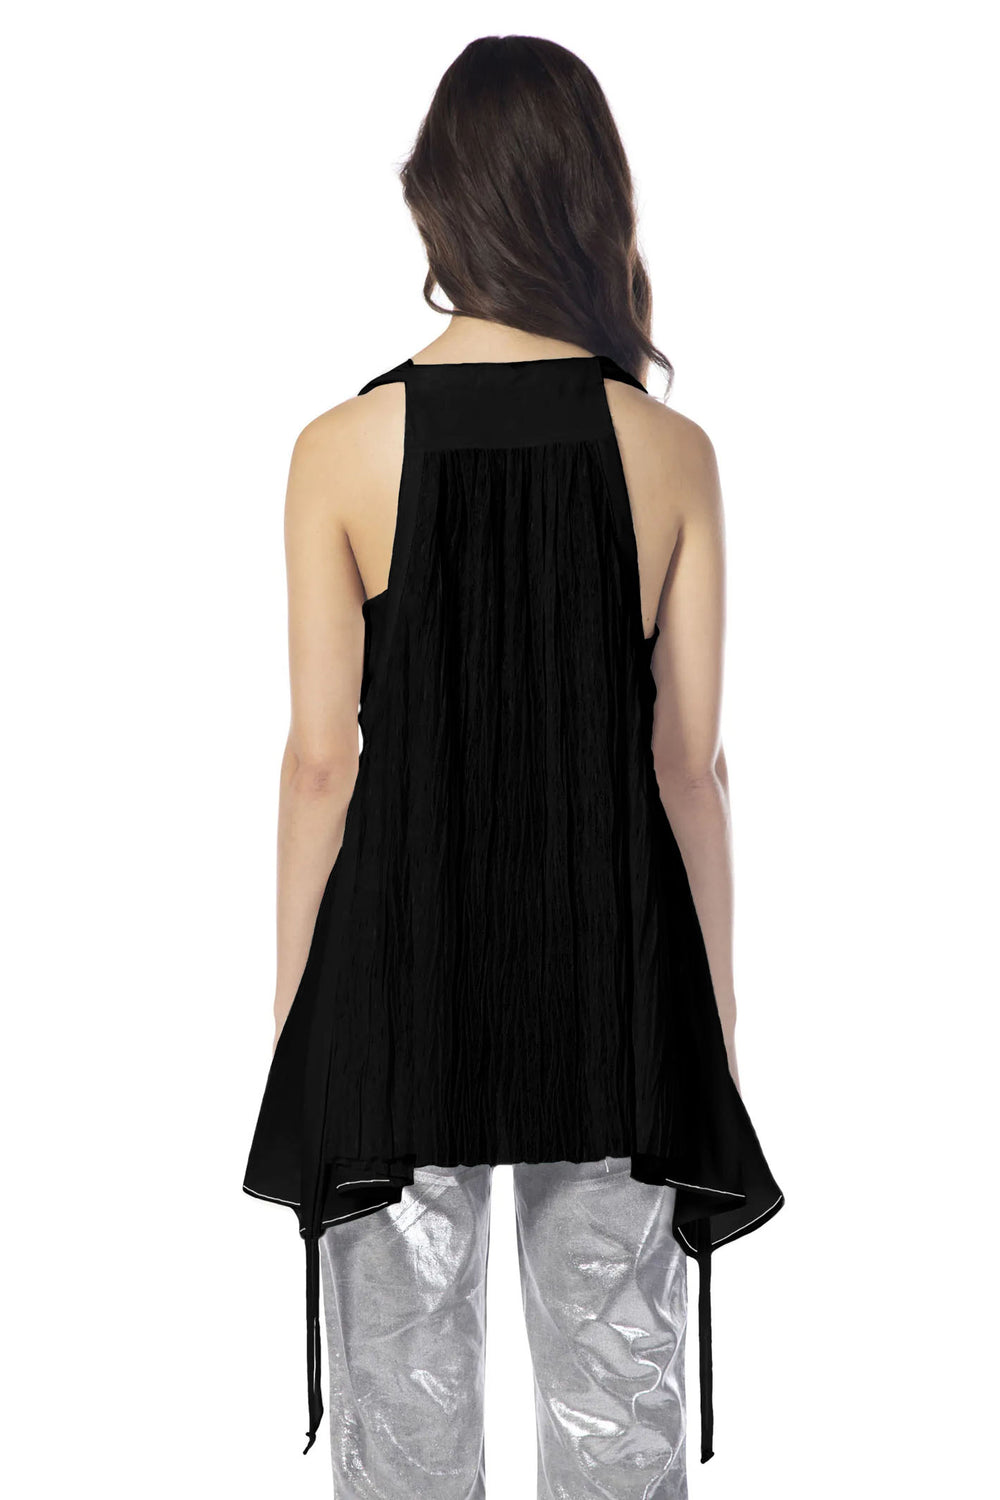 Elisa Cavaletti EJP249025301 Black Oversized Vest Top - Experience Boutique